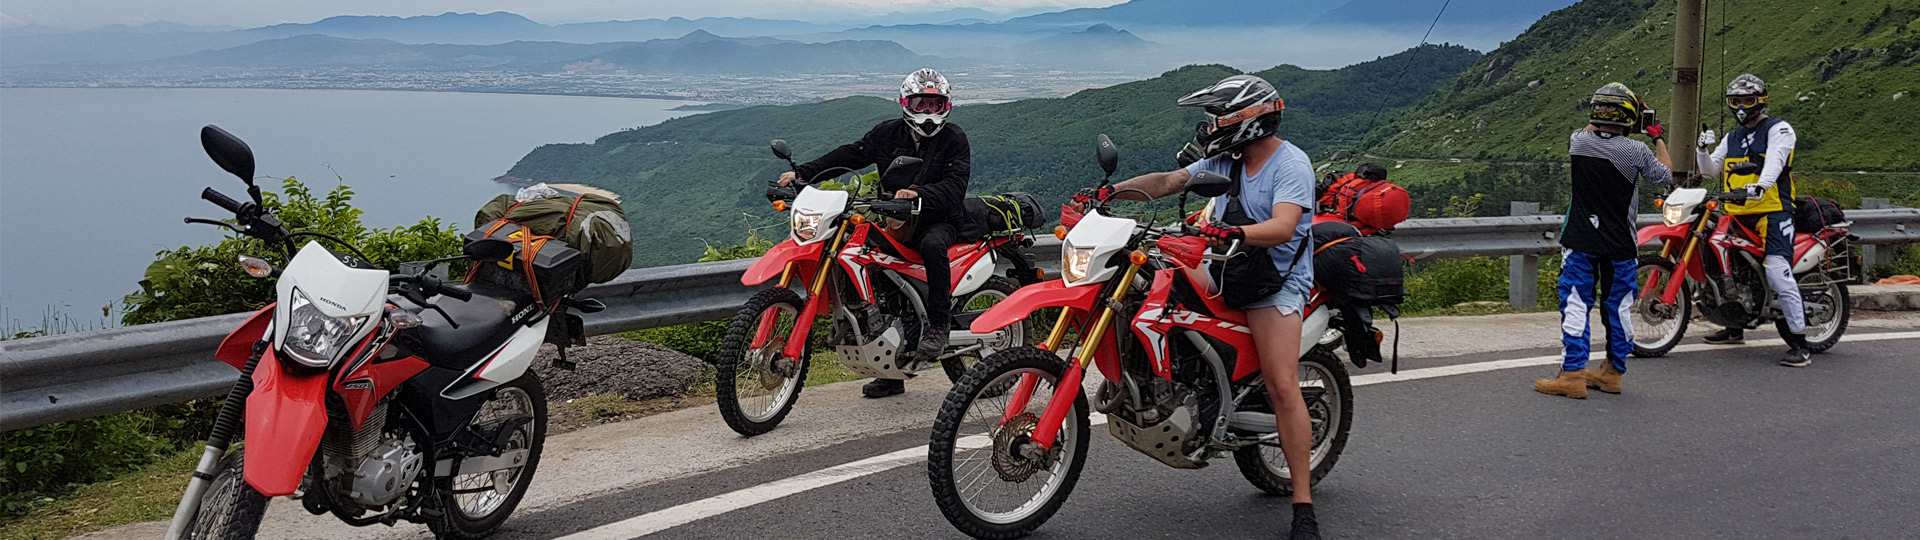 Vietnam Motorcycle Tours 1